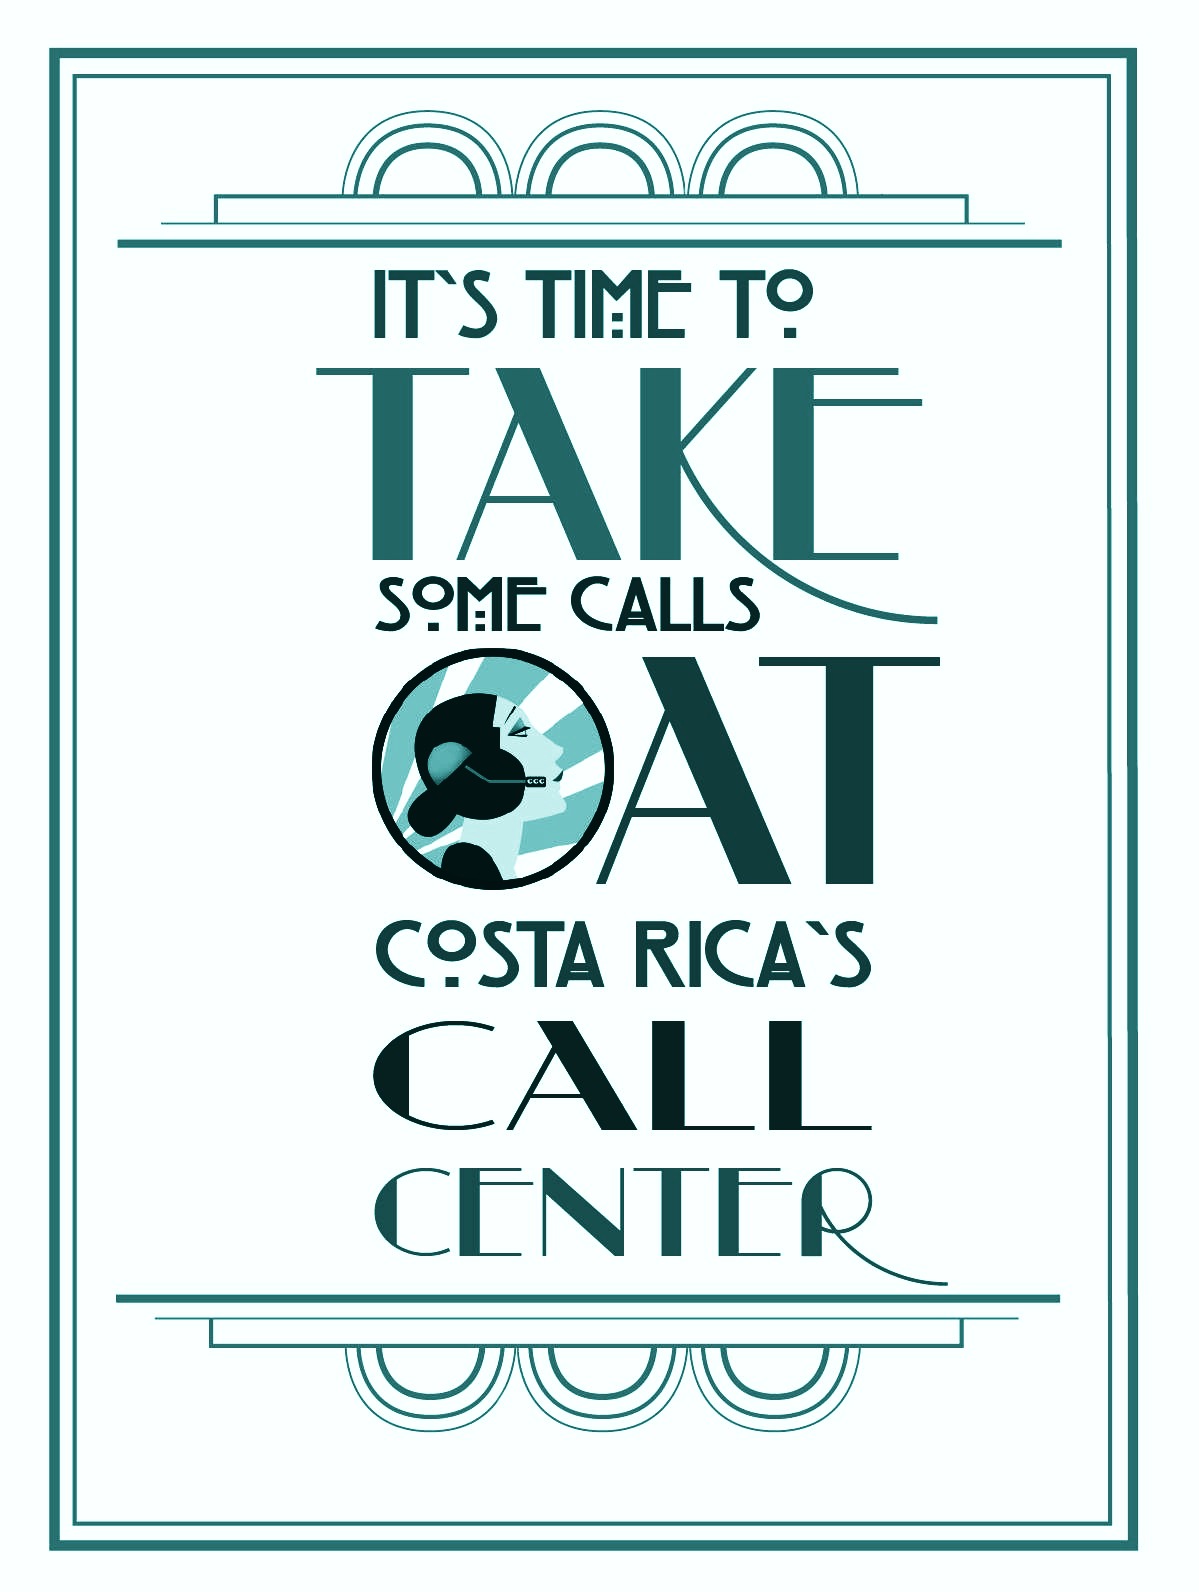 CALL CENTRE VALUATION COSTA RICA.jpg  by richardblank